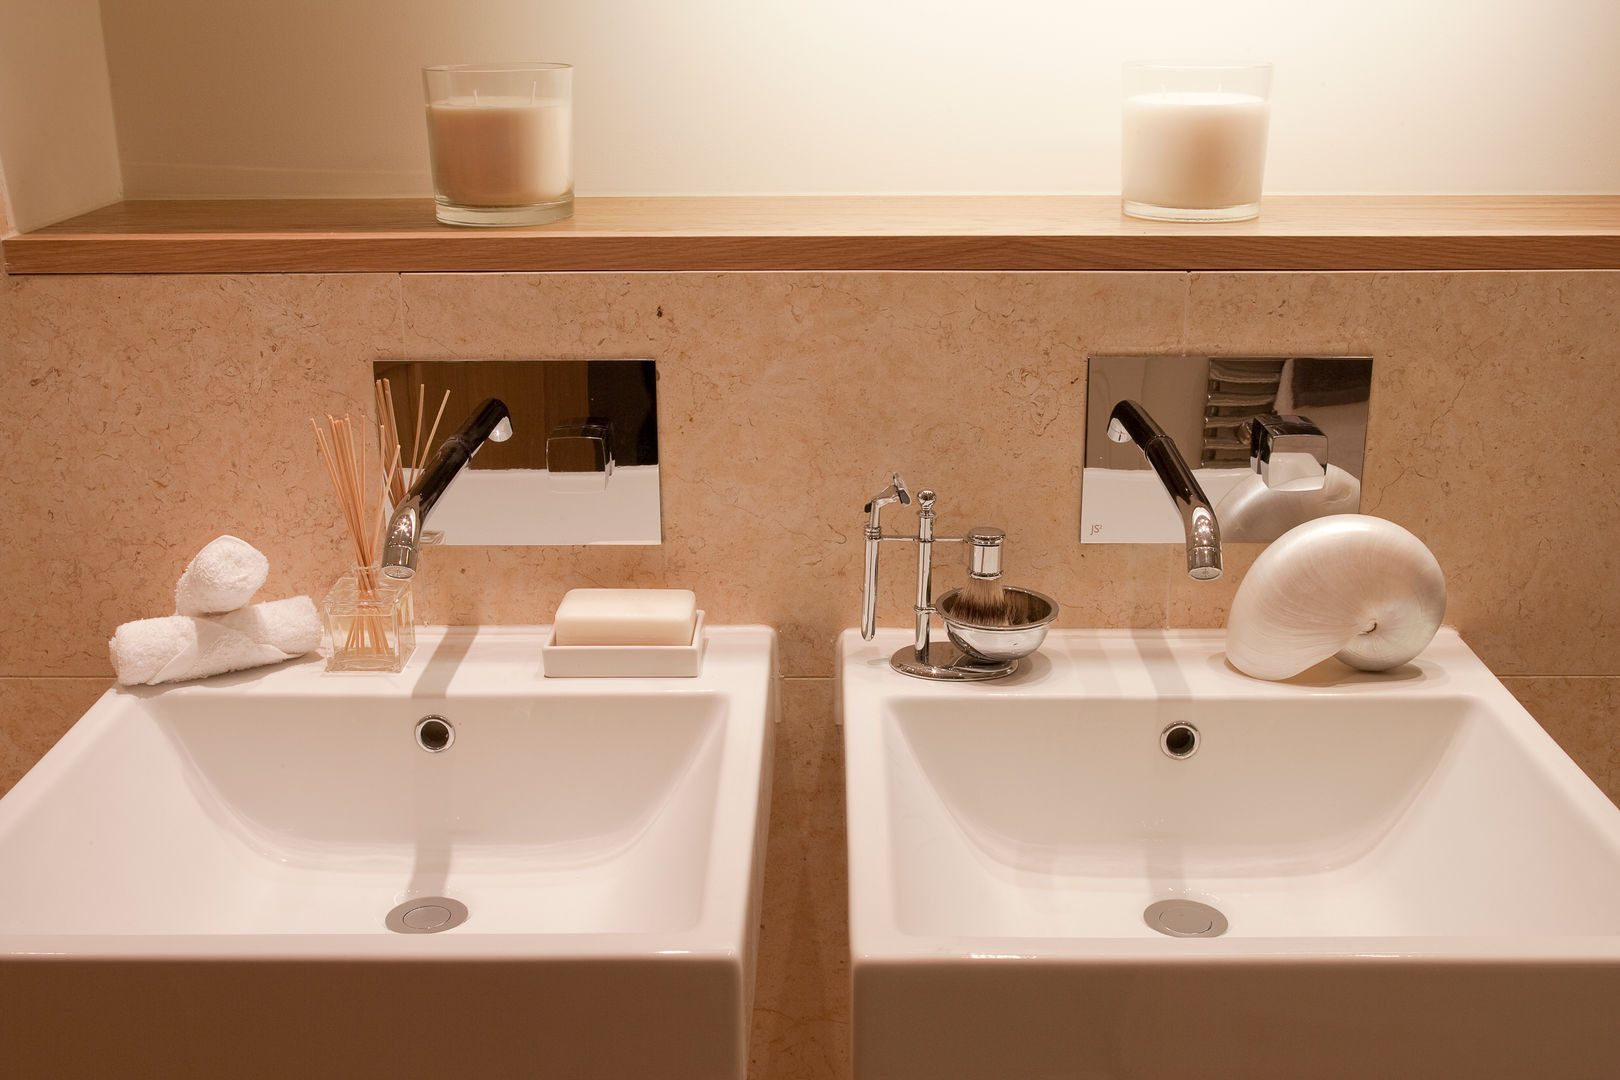 Bathroom Roselind Wilson Design Klasyczna łazienka luxury,candles,modern,bathroom